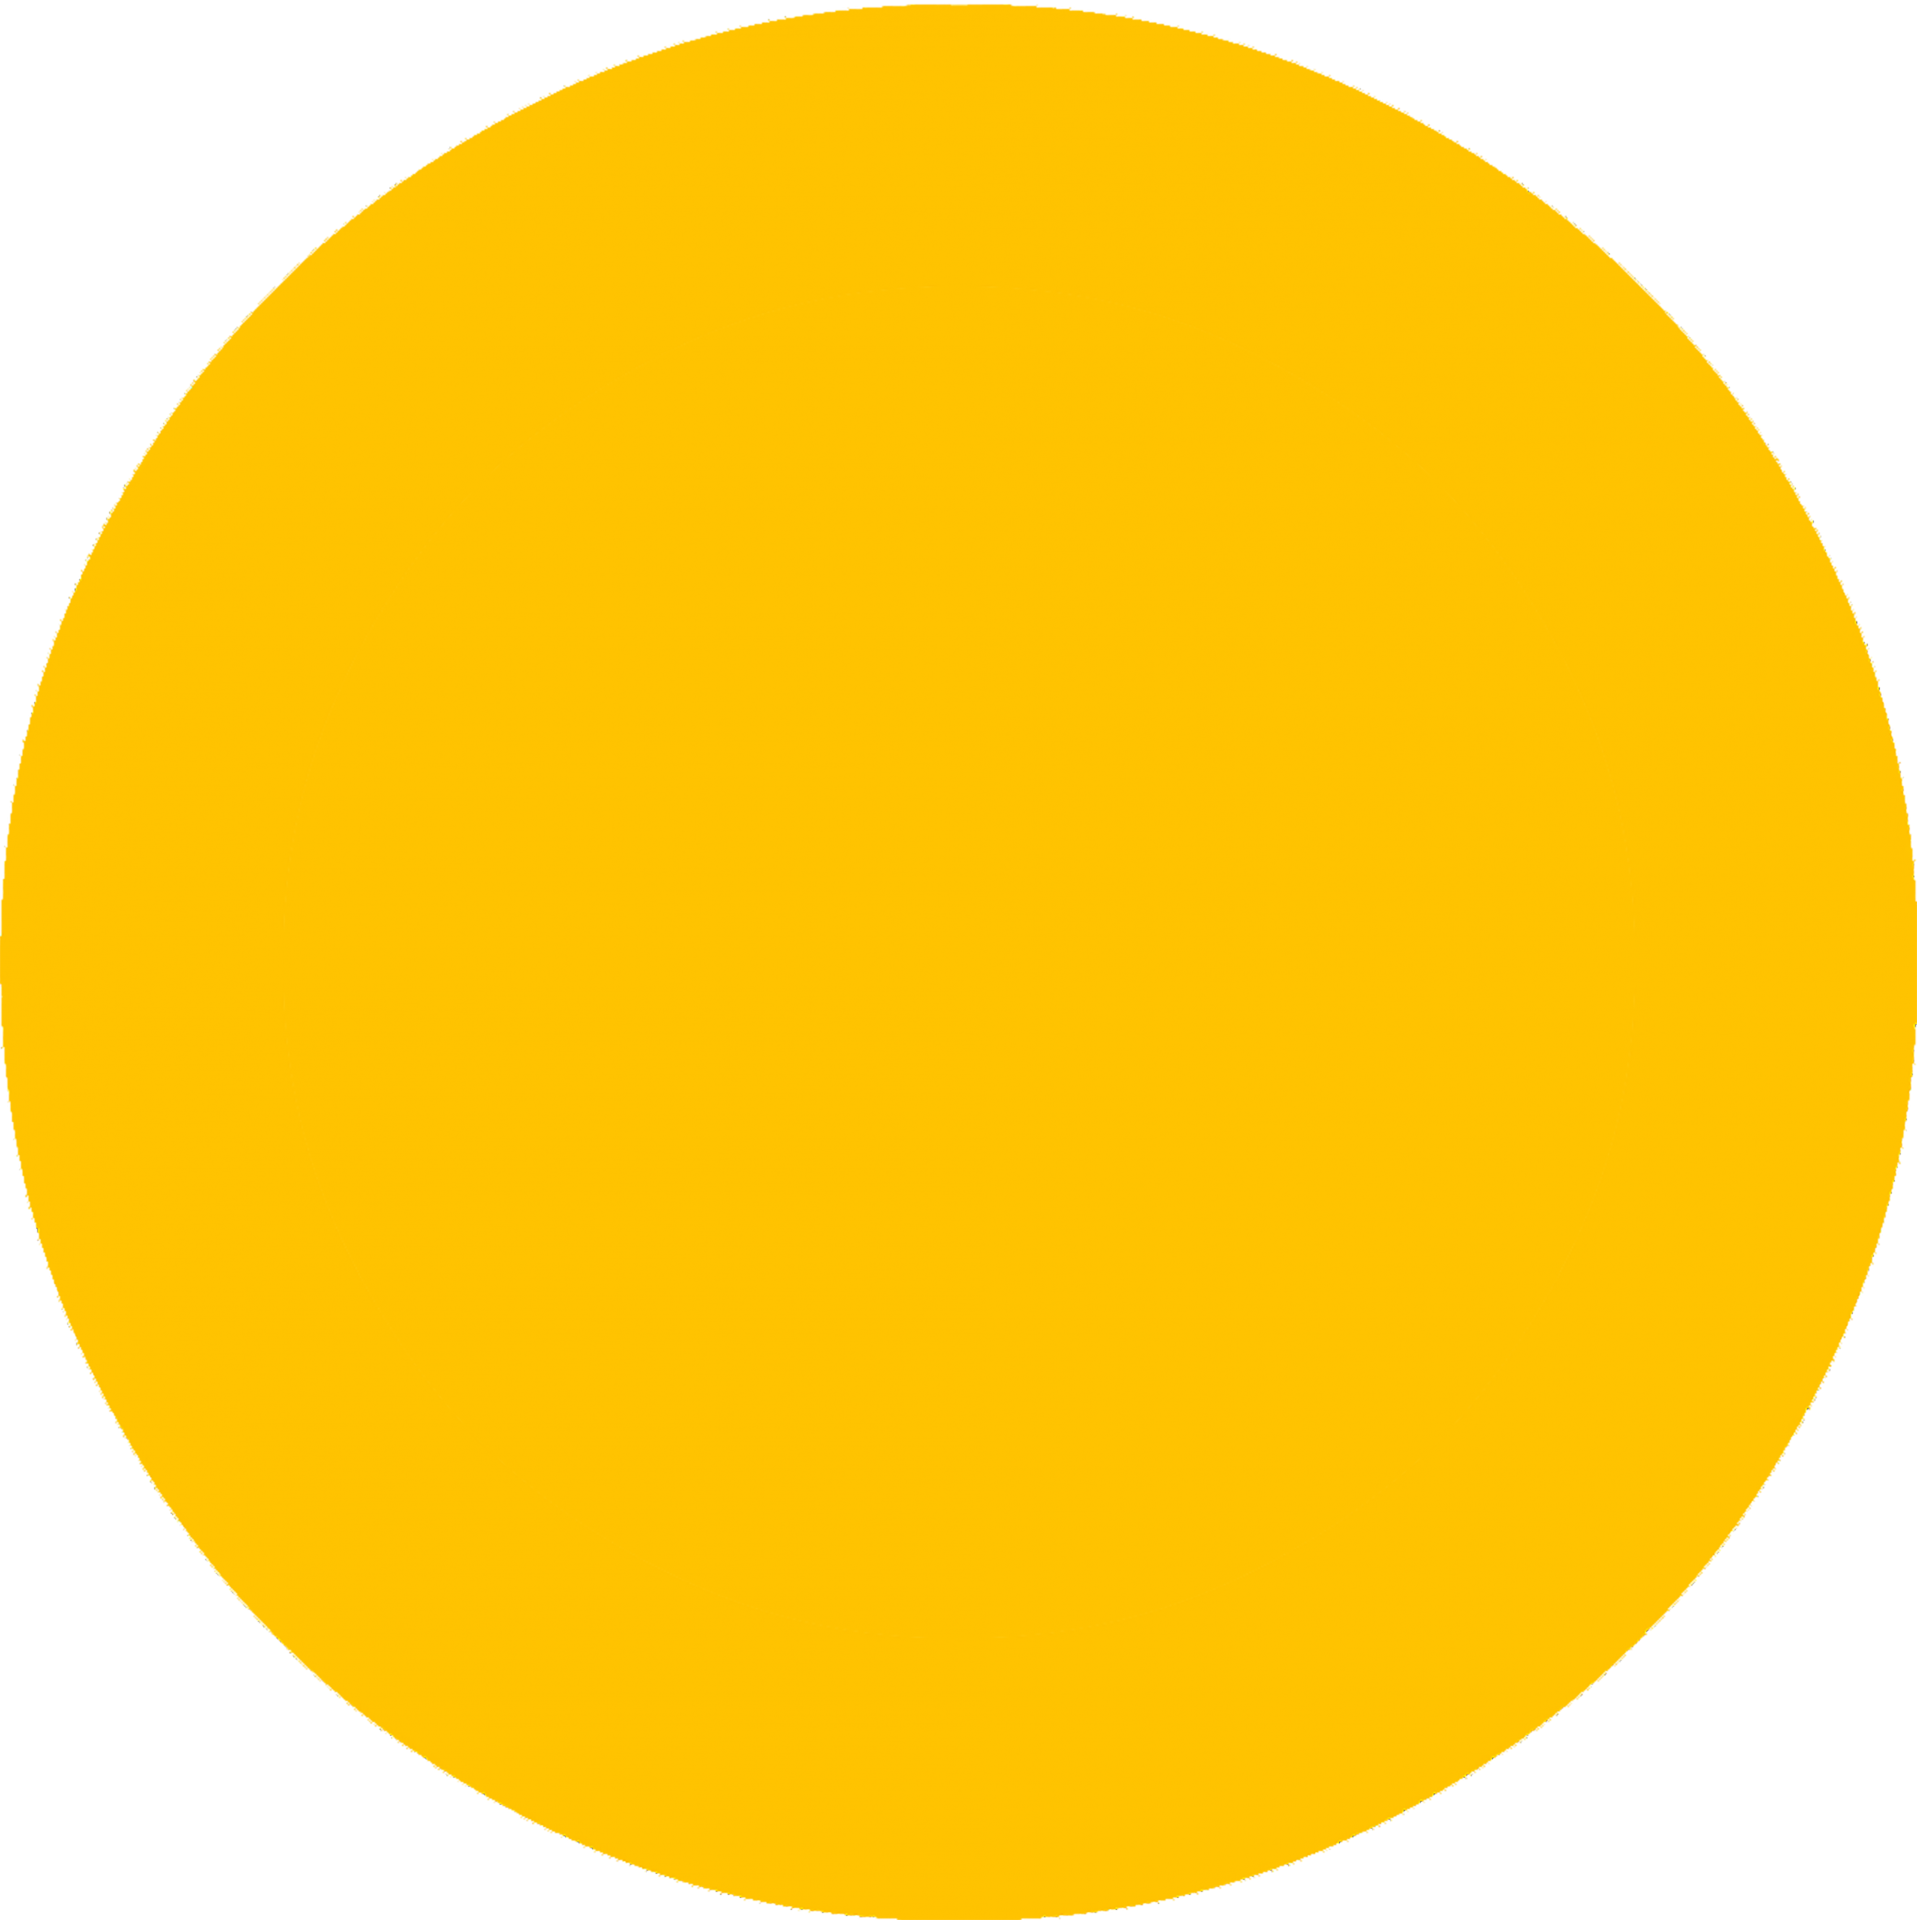 Желто оранжевый круг. Желтый круг. Желтый кружок. Желтые кружочки. Желтый круг без фона.